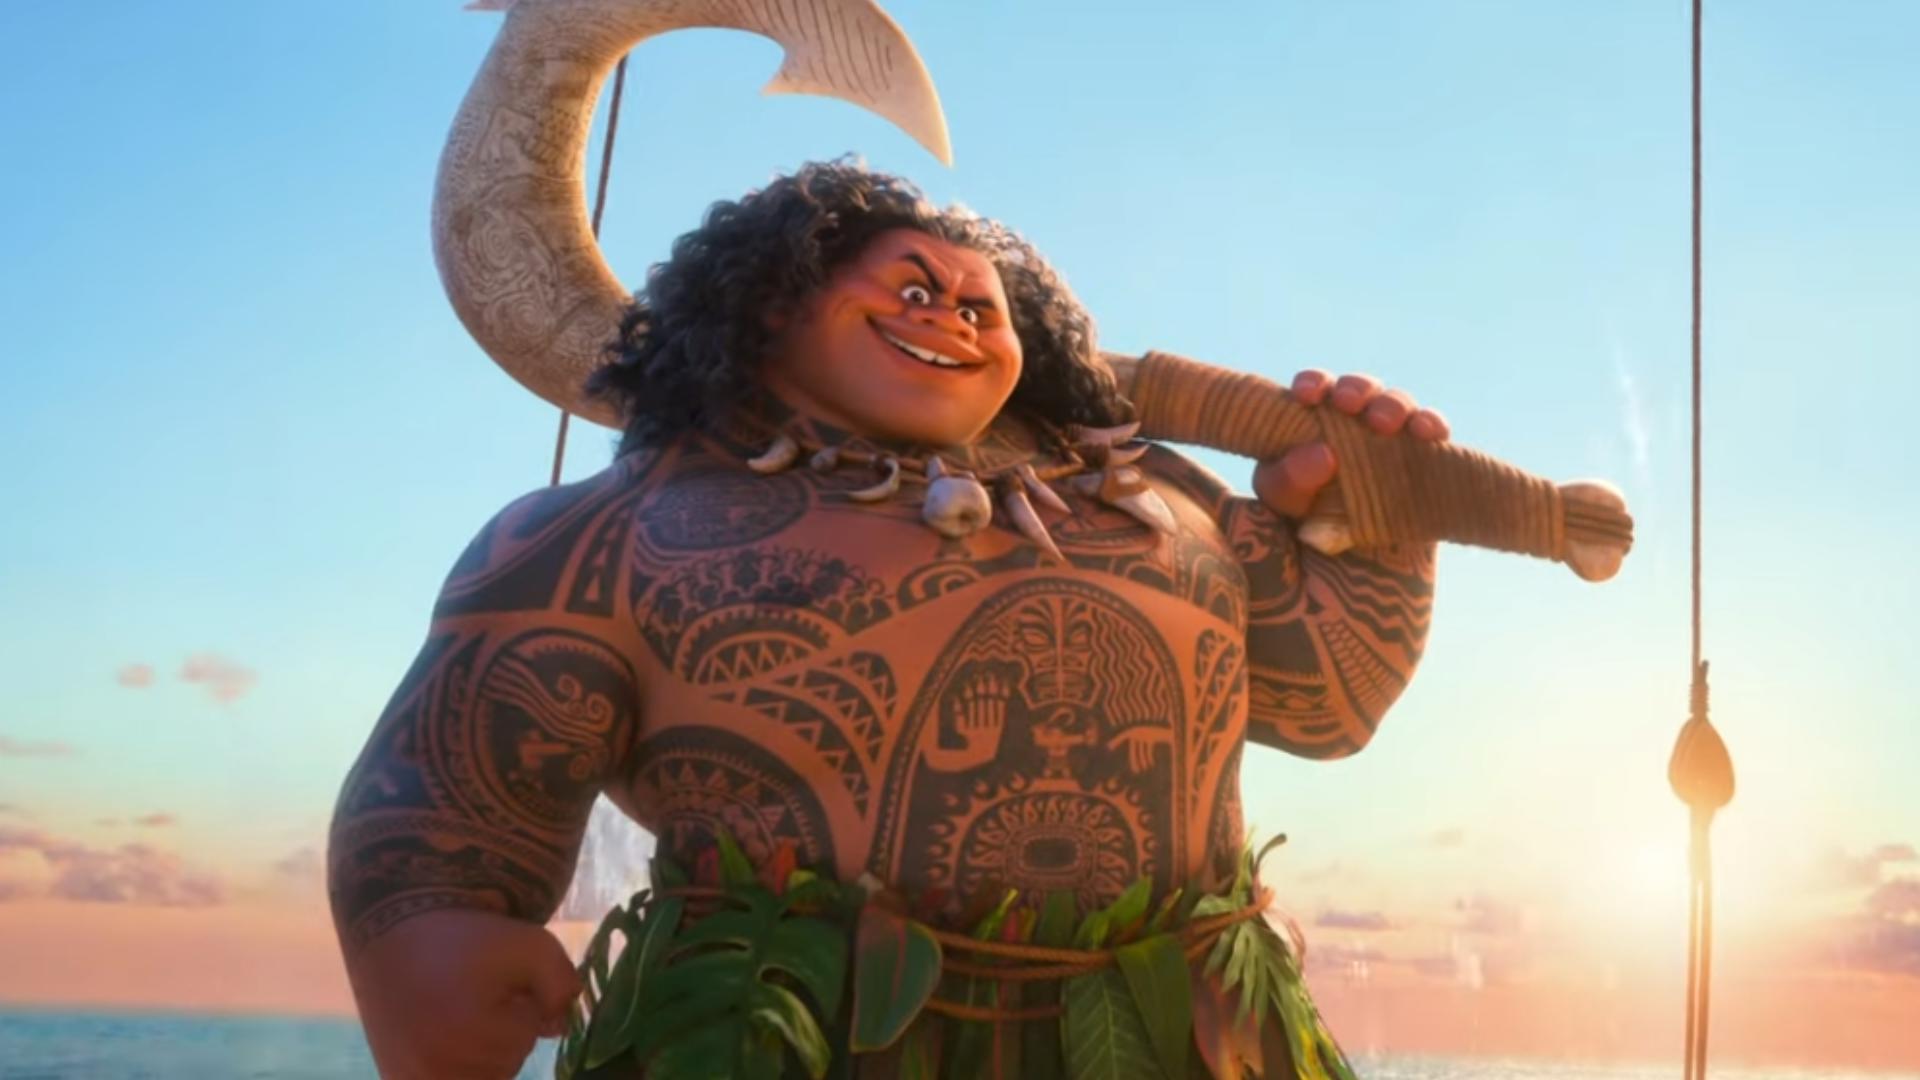 Disney said the all-new film stars Auli‘i Cravalho and Dwayne Johnson as Moana and demigod Maui, respectively.